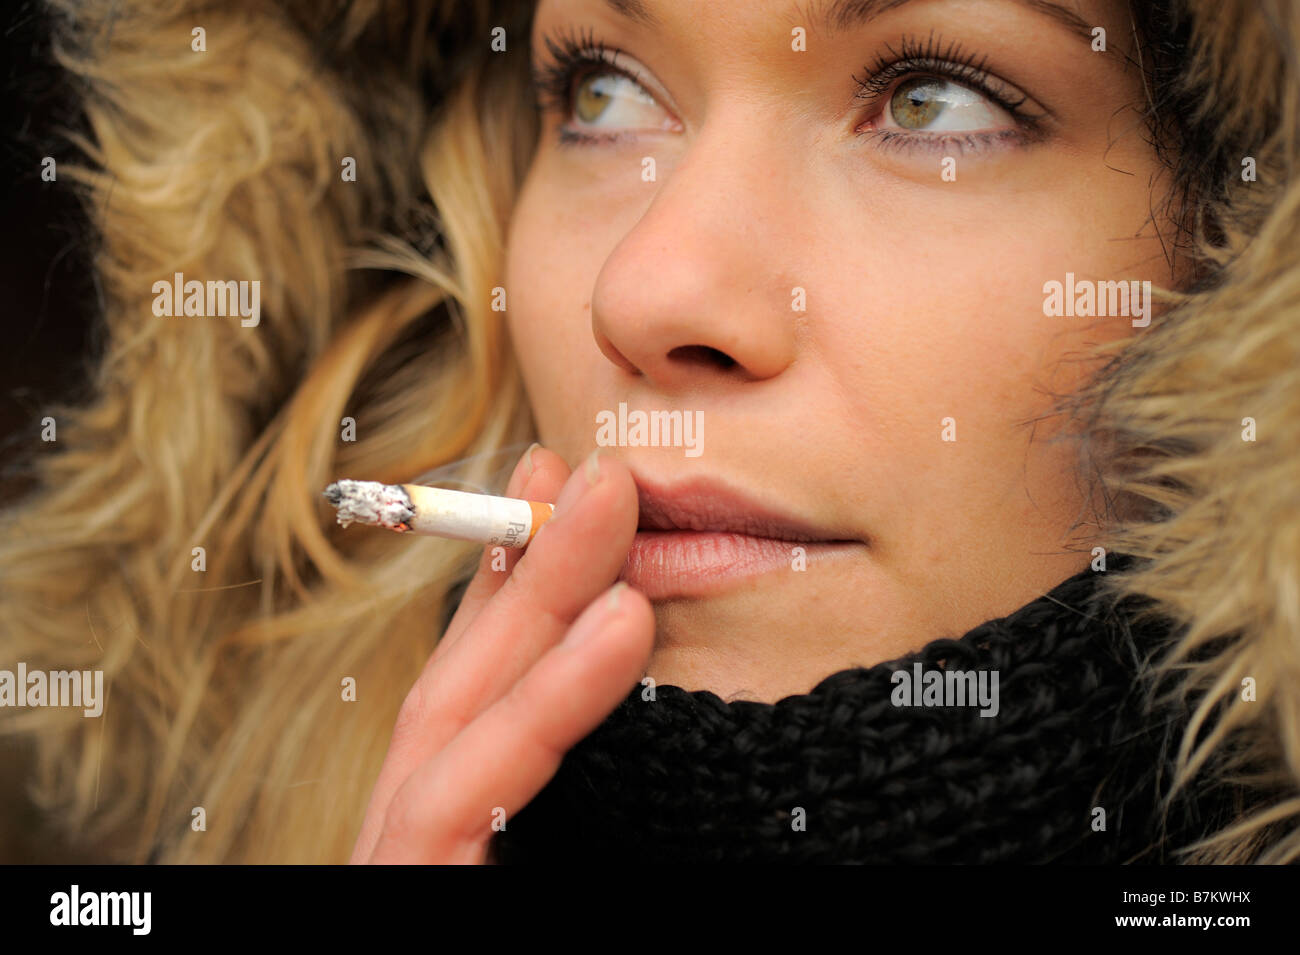 young woman smoking Stock Photo